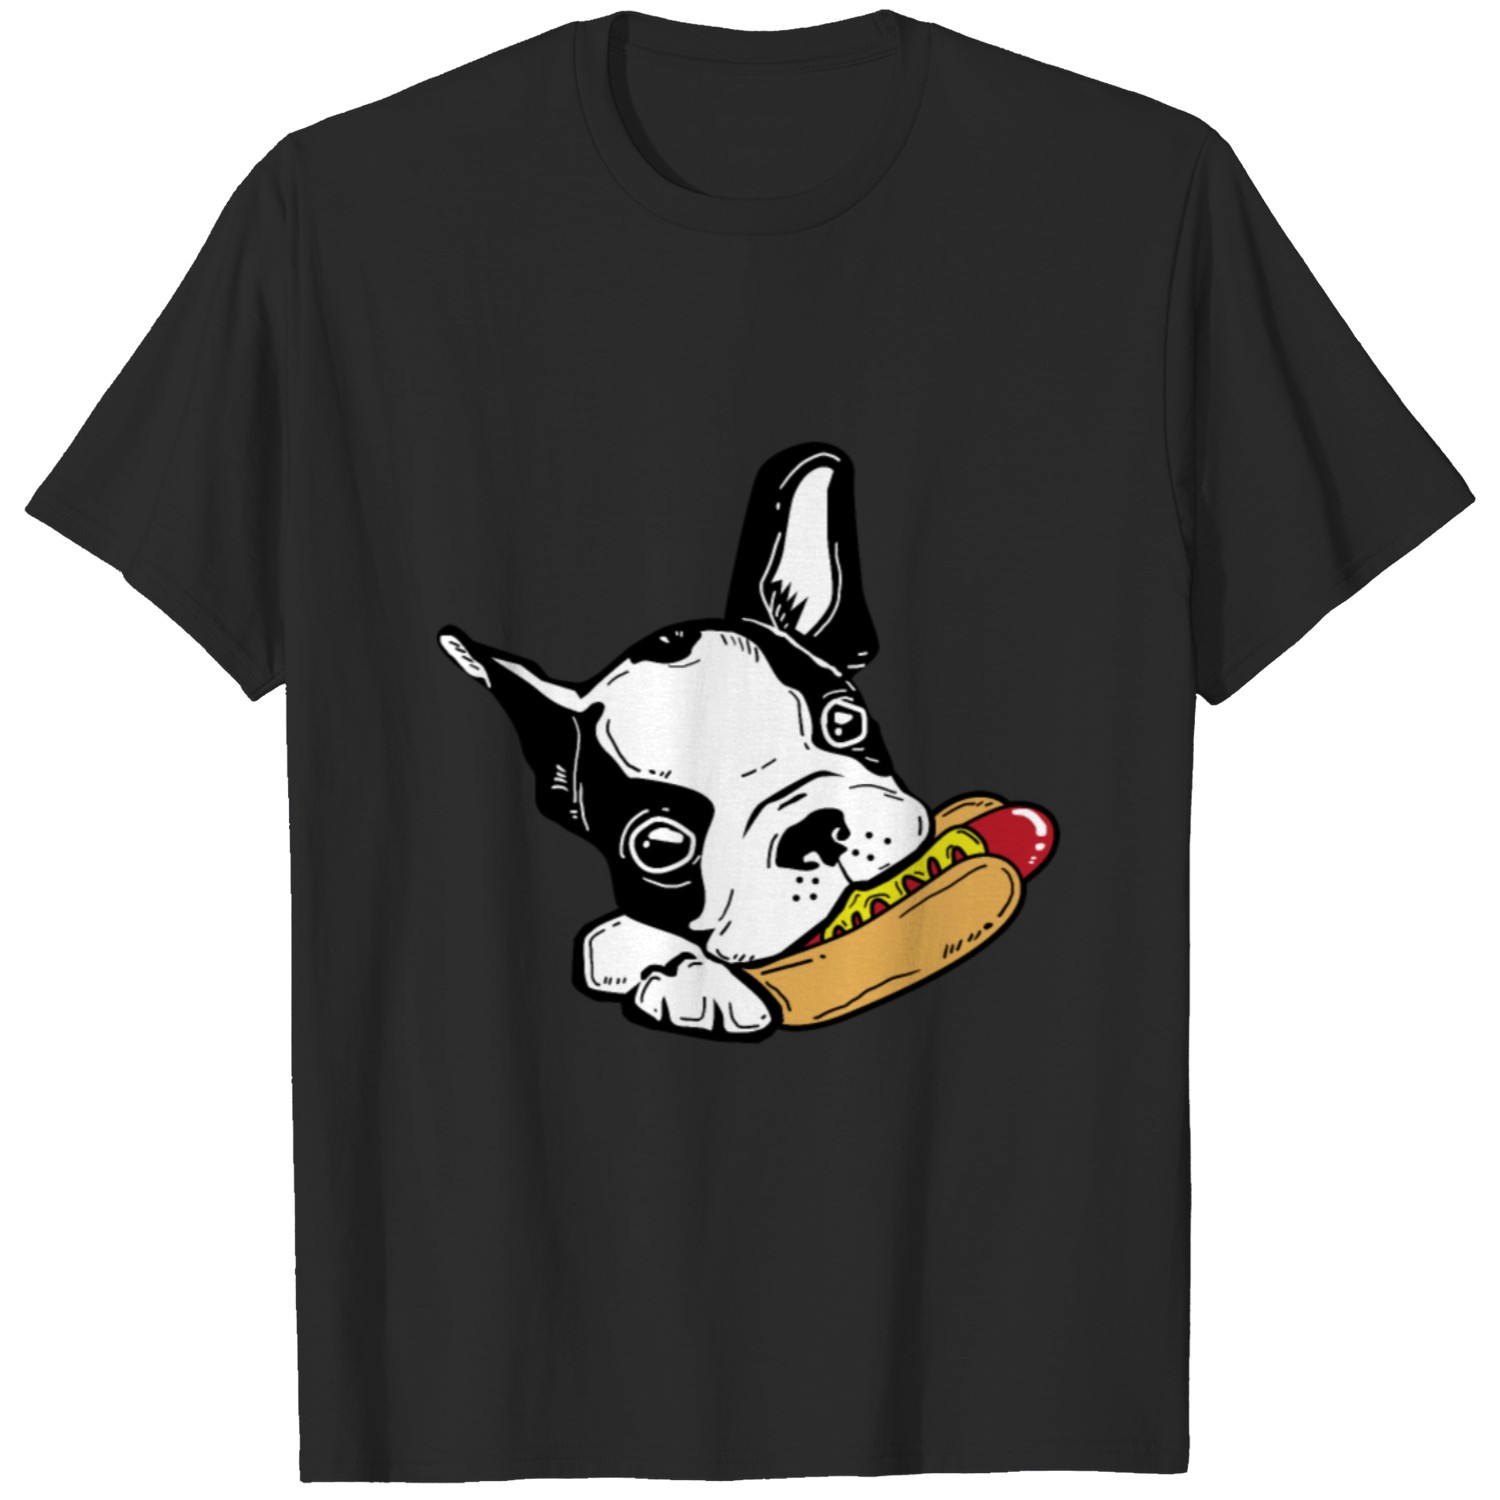 French Bulldog Hot Dog T-shirt